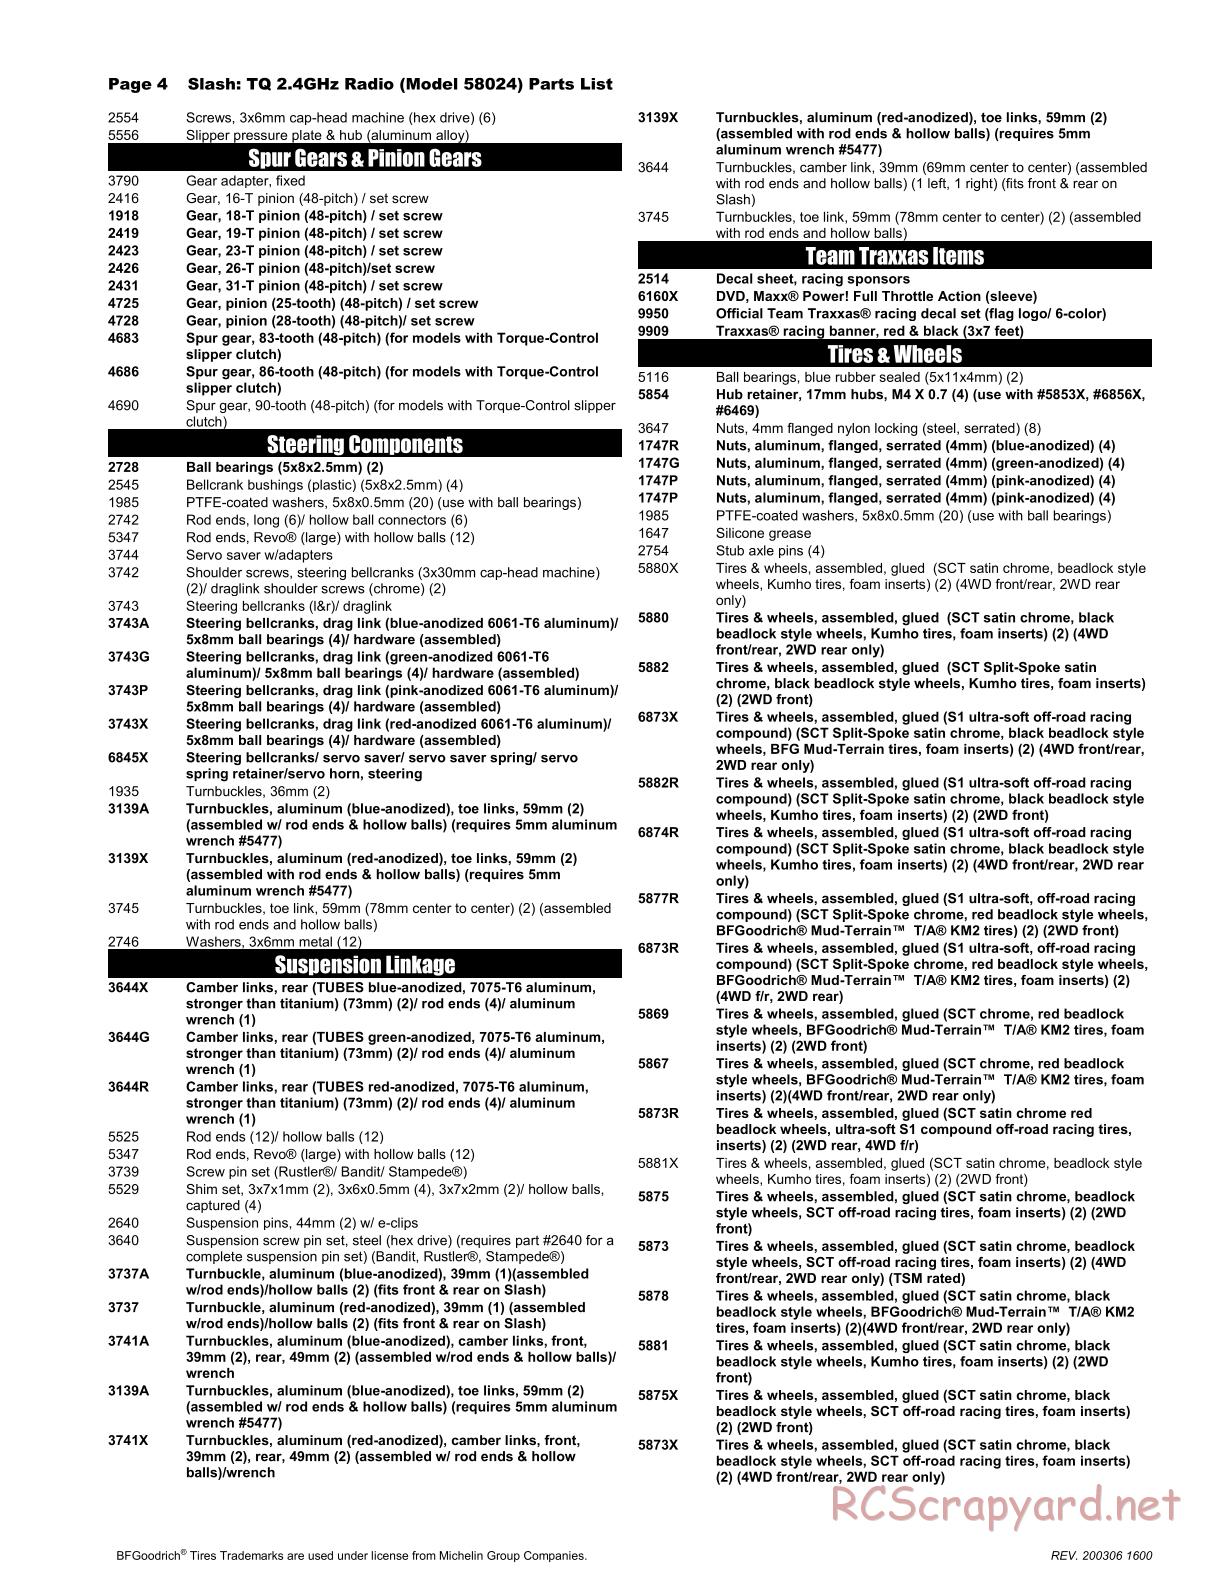 Traxxas - Slash 2WD - Parts List - Page 4